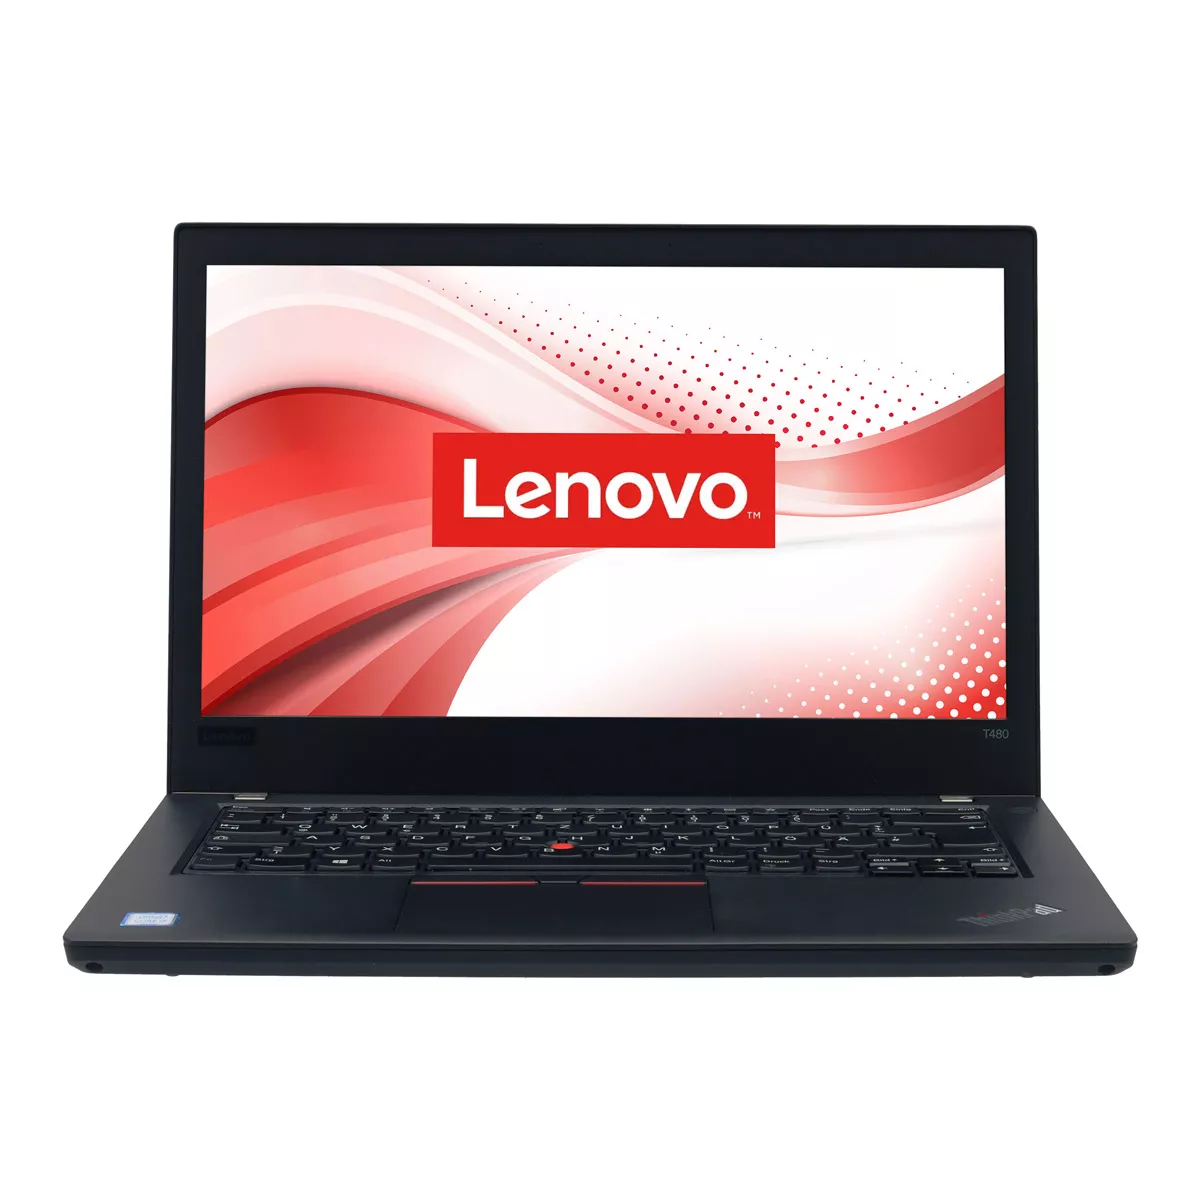 Lenovo ThinkPad T480 Core i5 8350U Full-HD Touch 500 GB M.2 nVME SSD Webcam A+